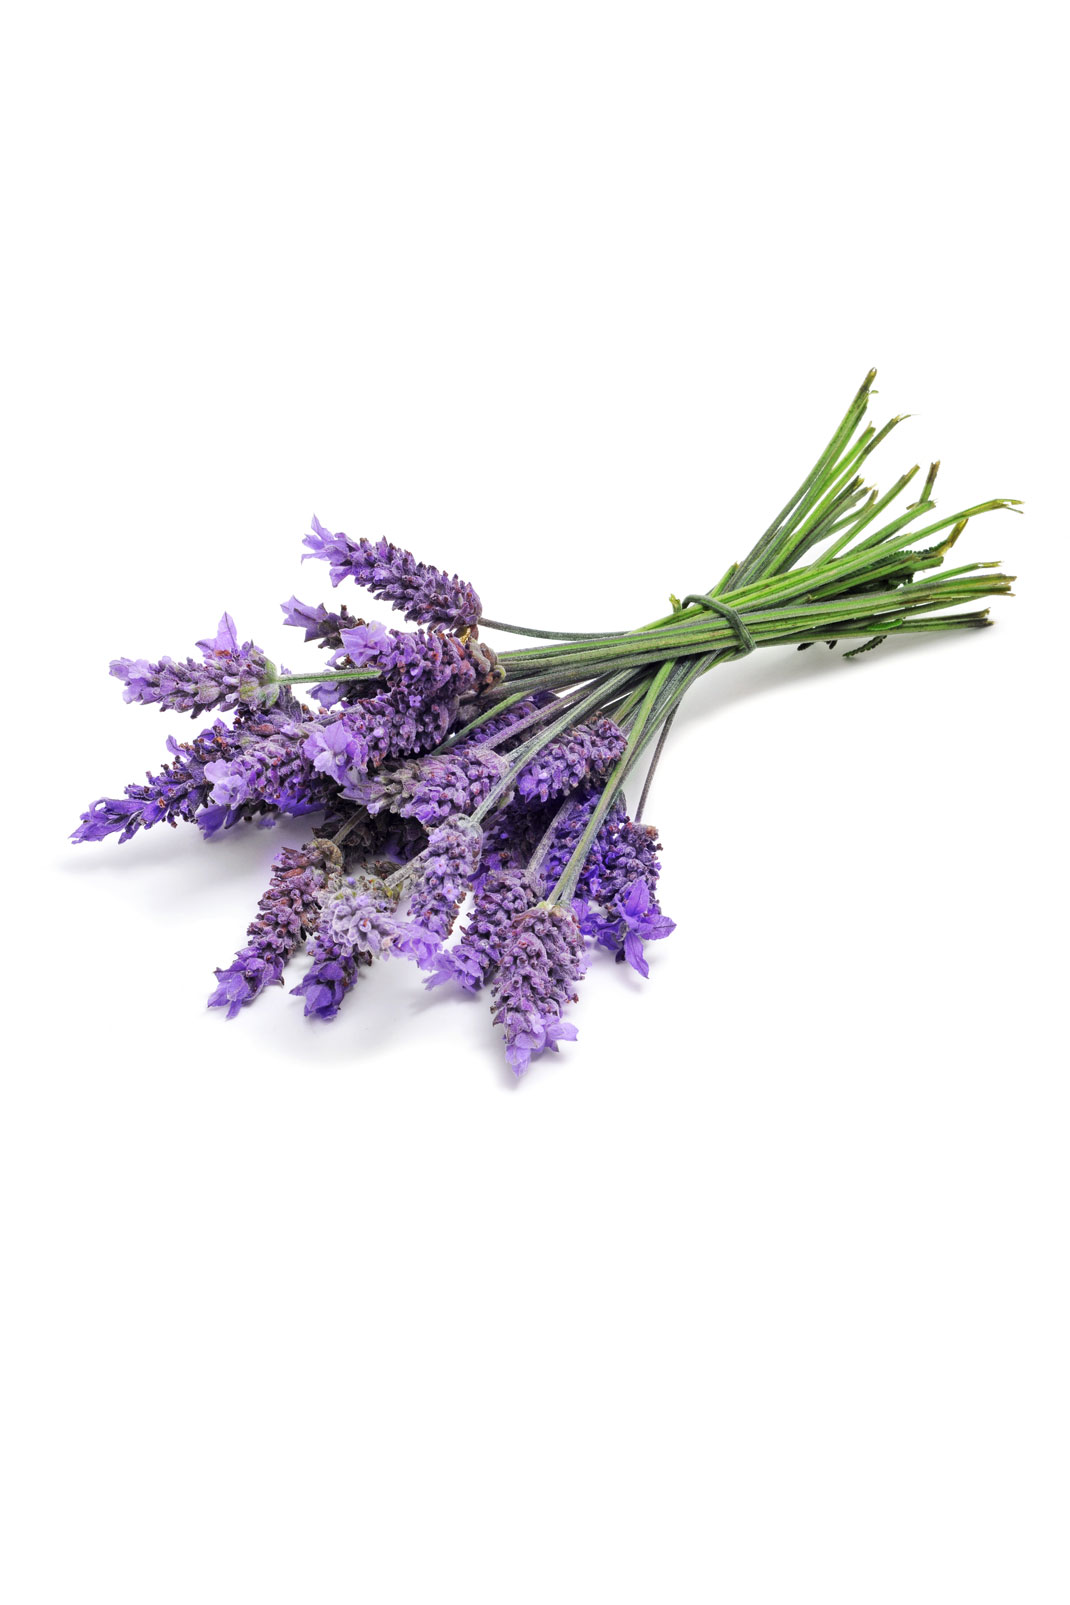 2x3_1070x1605_lavender_botanical_us_english_web.jpg